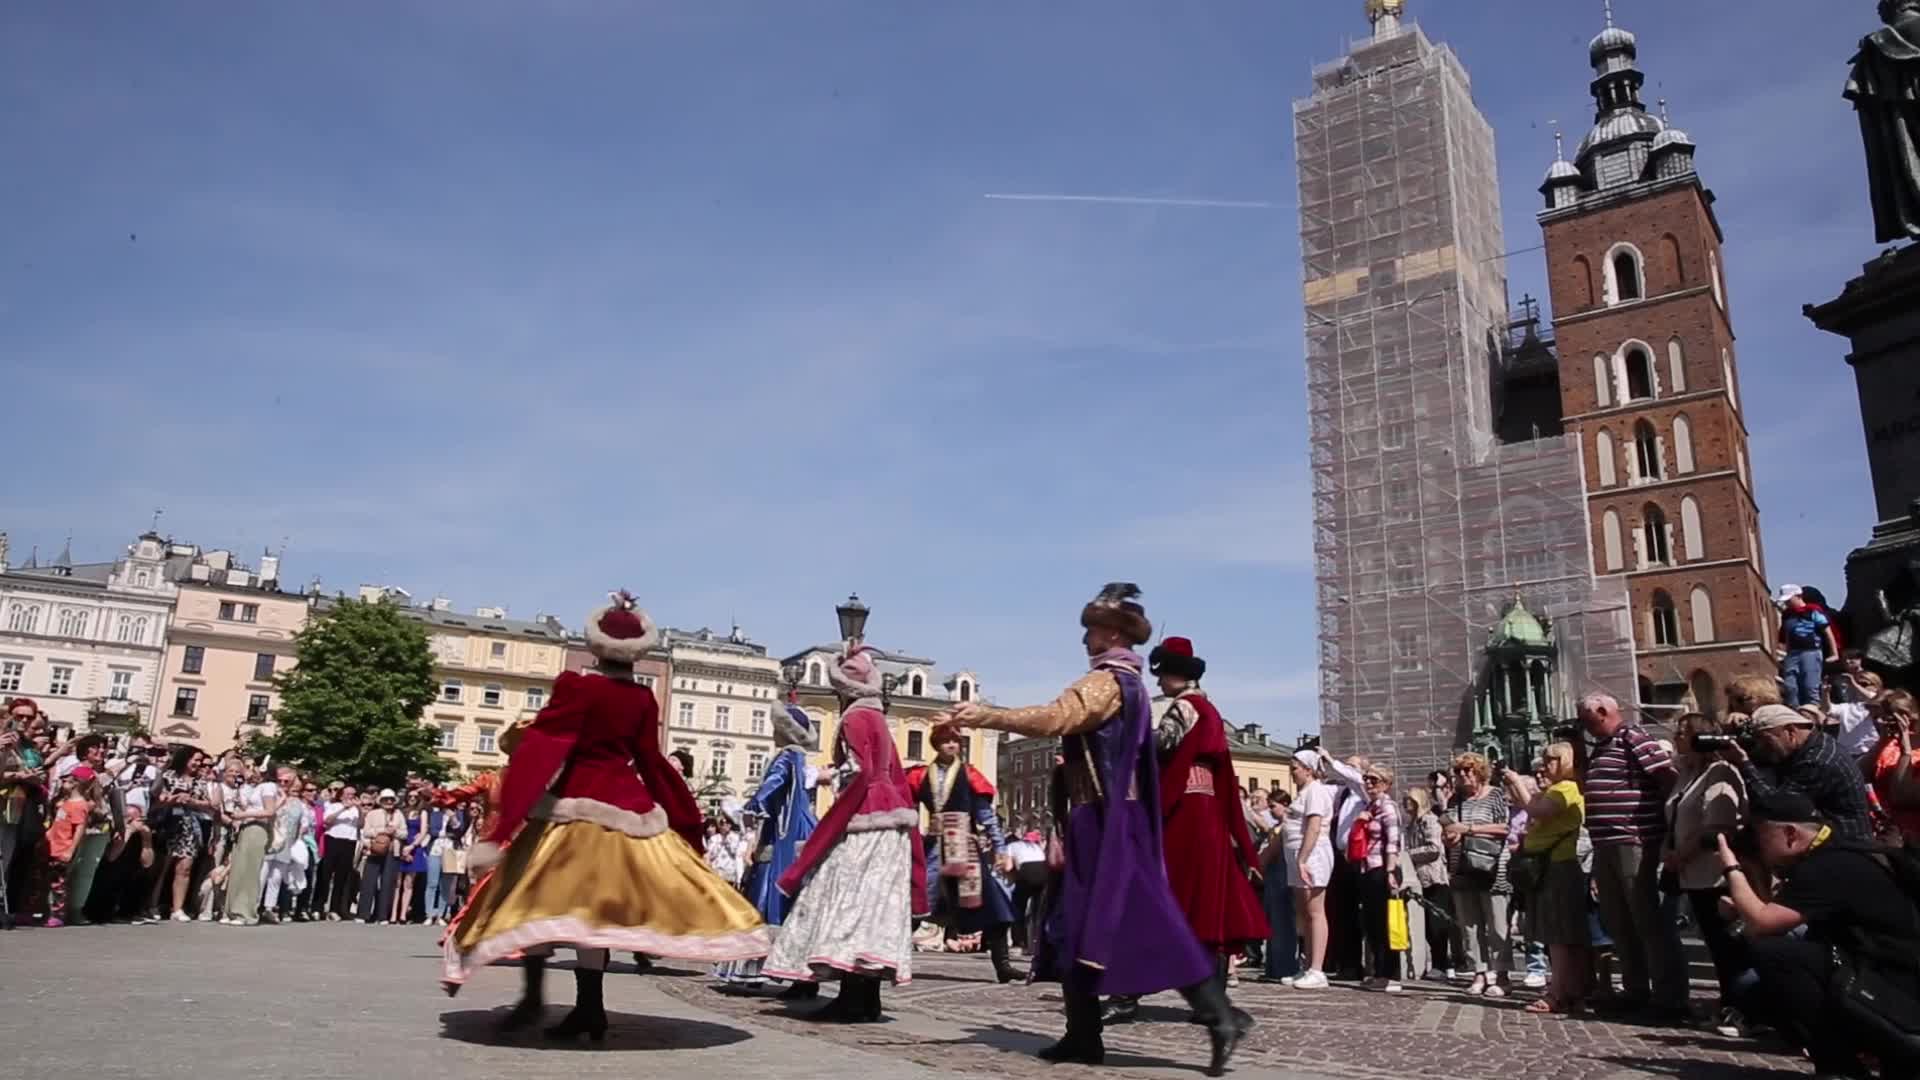 International Dance Day celebrated with Polonez in Krakow